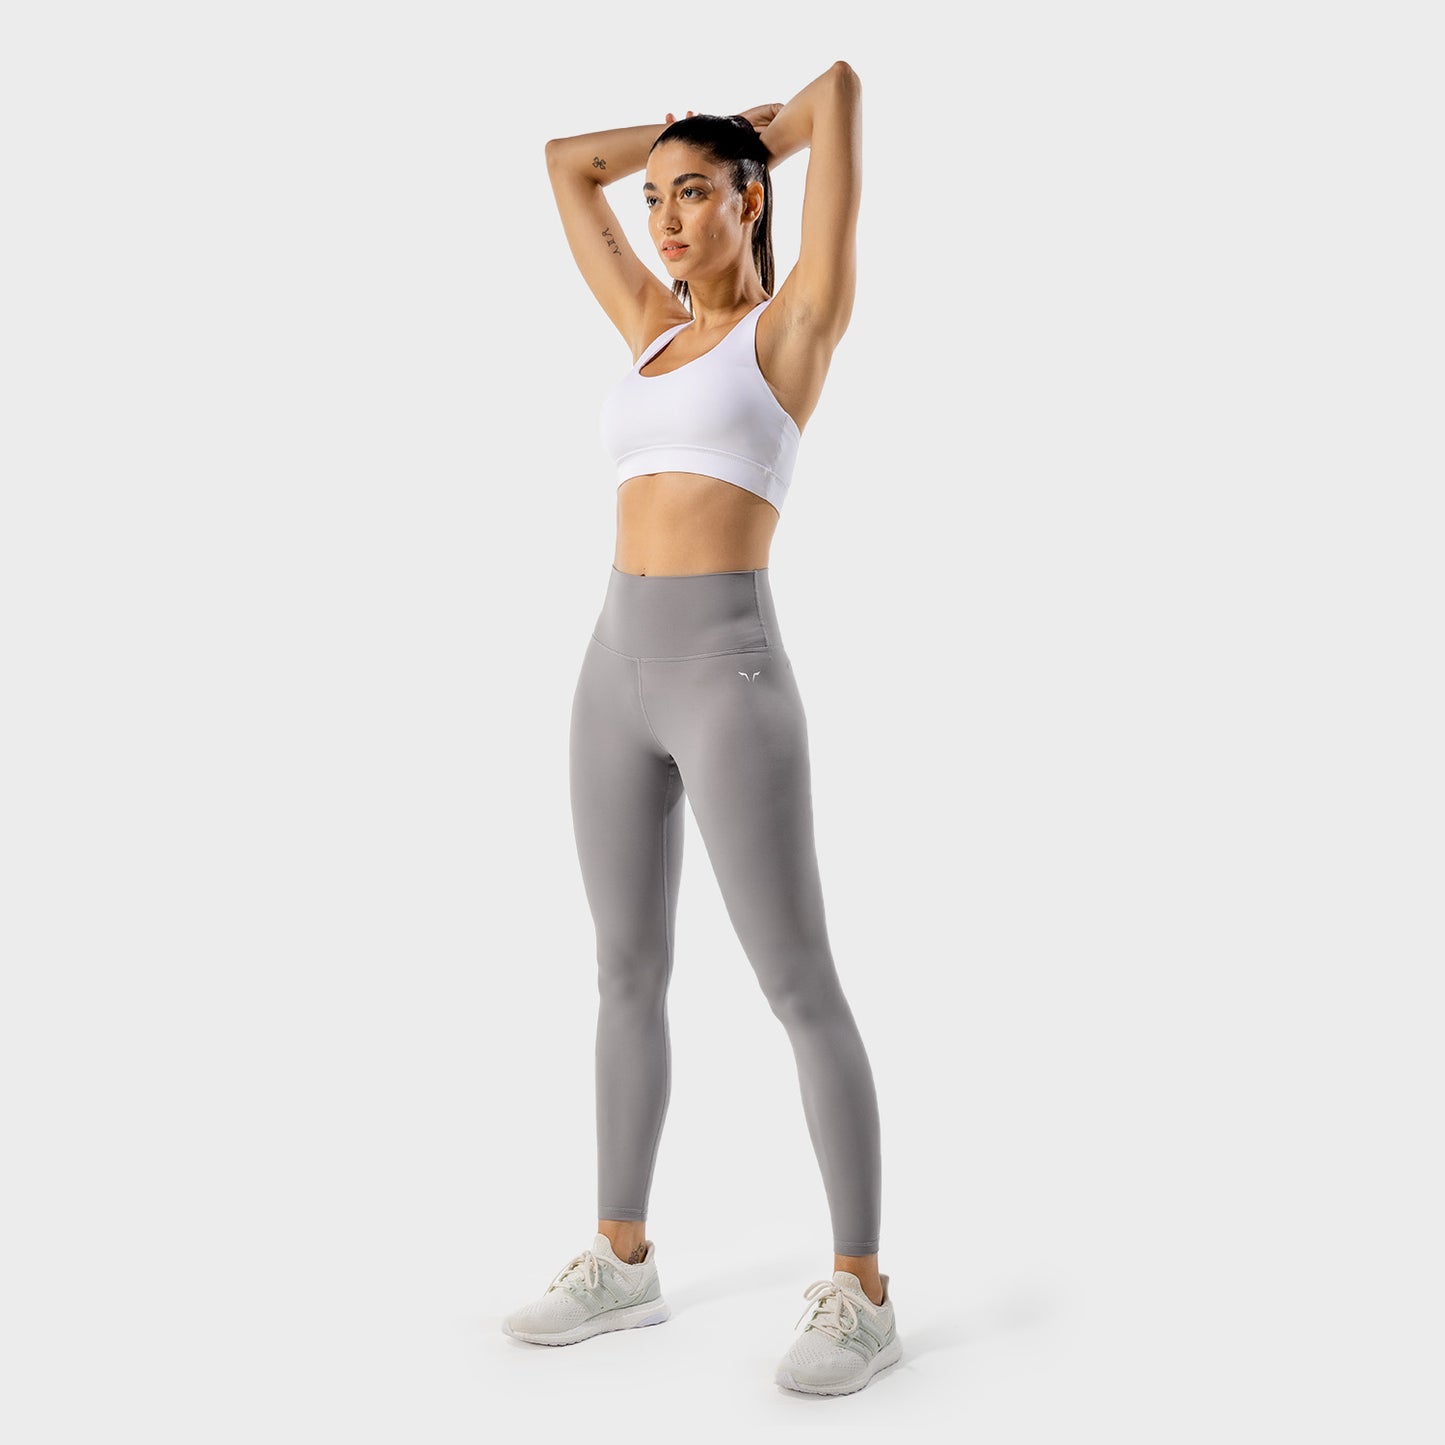 squatwolf-workout-clothes-core-agile-leggings-grey-gym-leggings-for-women